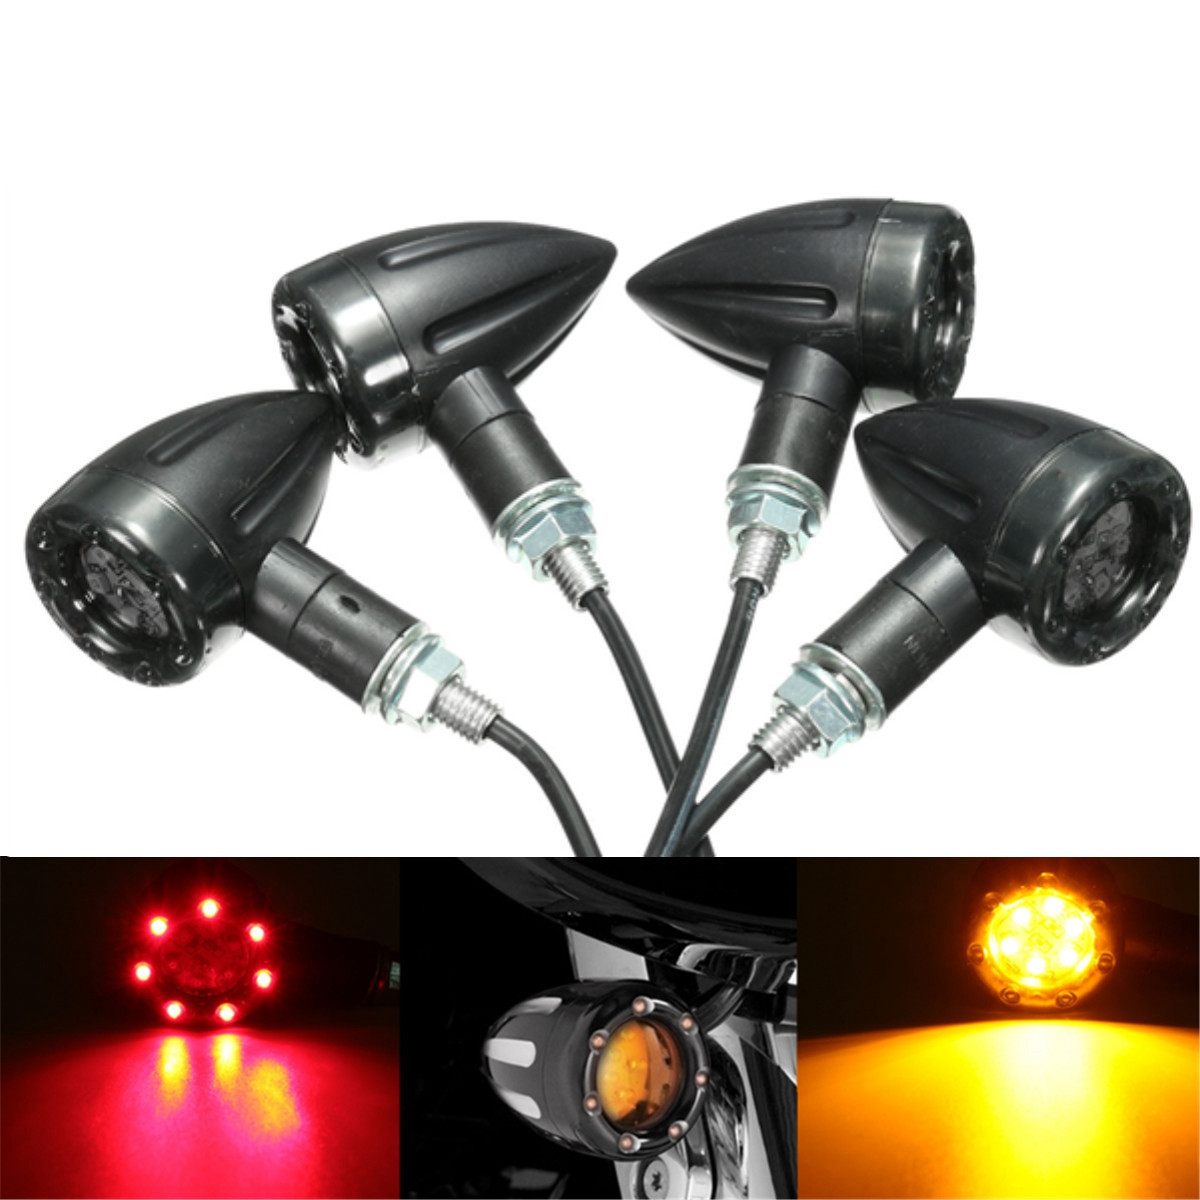 4X Universal LED Amber+Red Light Motorcycle Rear Turn Signal Brake Lights Running Lamp 2